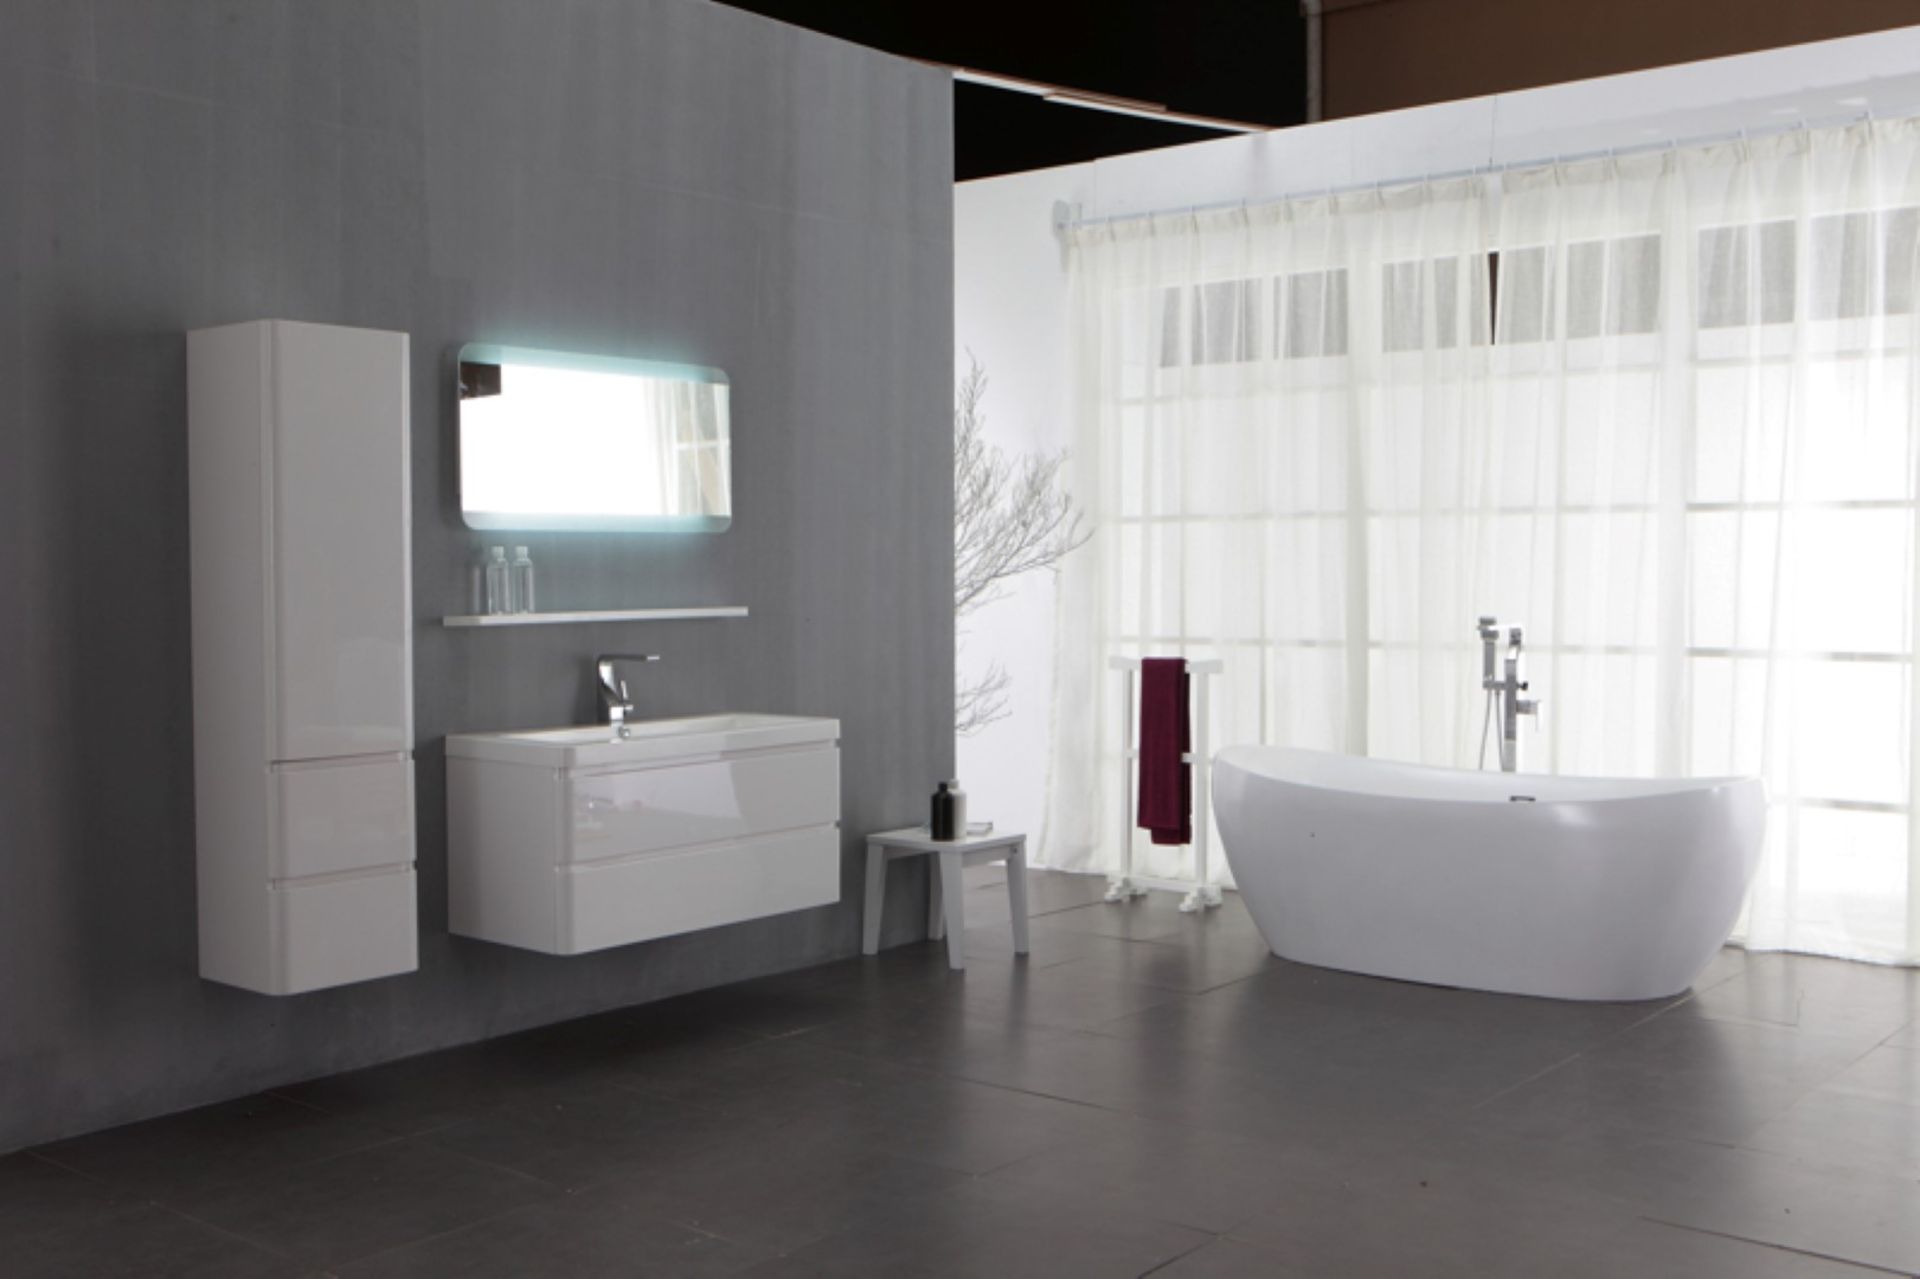 1 x Austin Bathrooms URBAN 60 Wall Mounted Bathroom Vanity Unit With MarbleTECH Sink Basin - RRP £ - Image 6 of 6